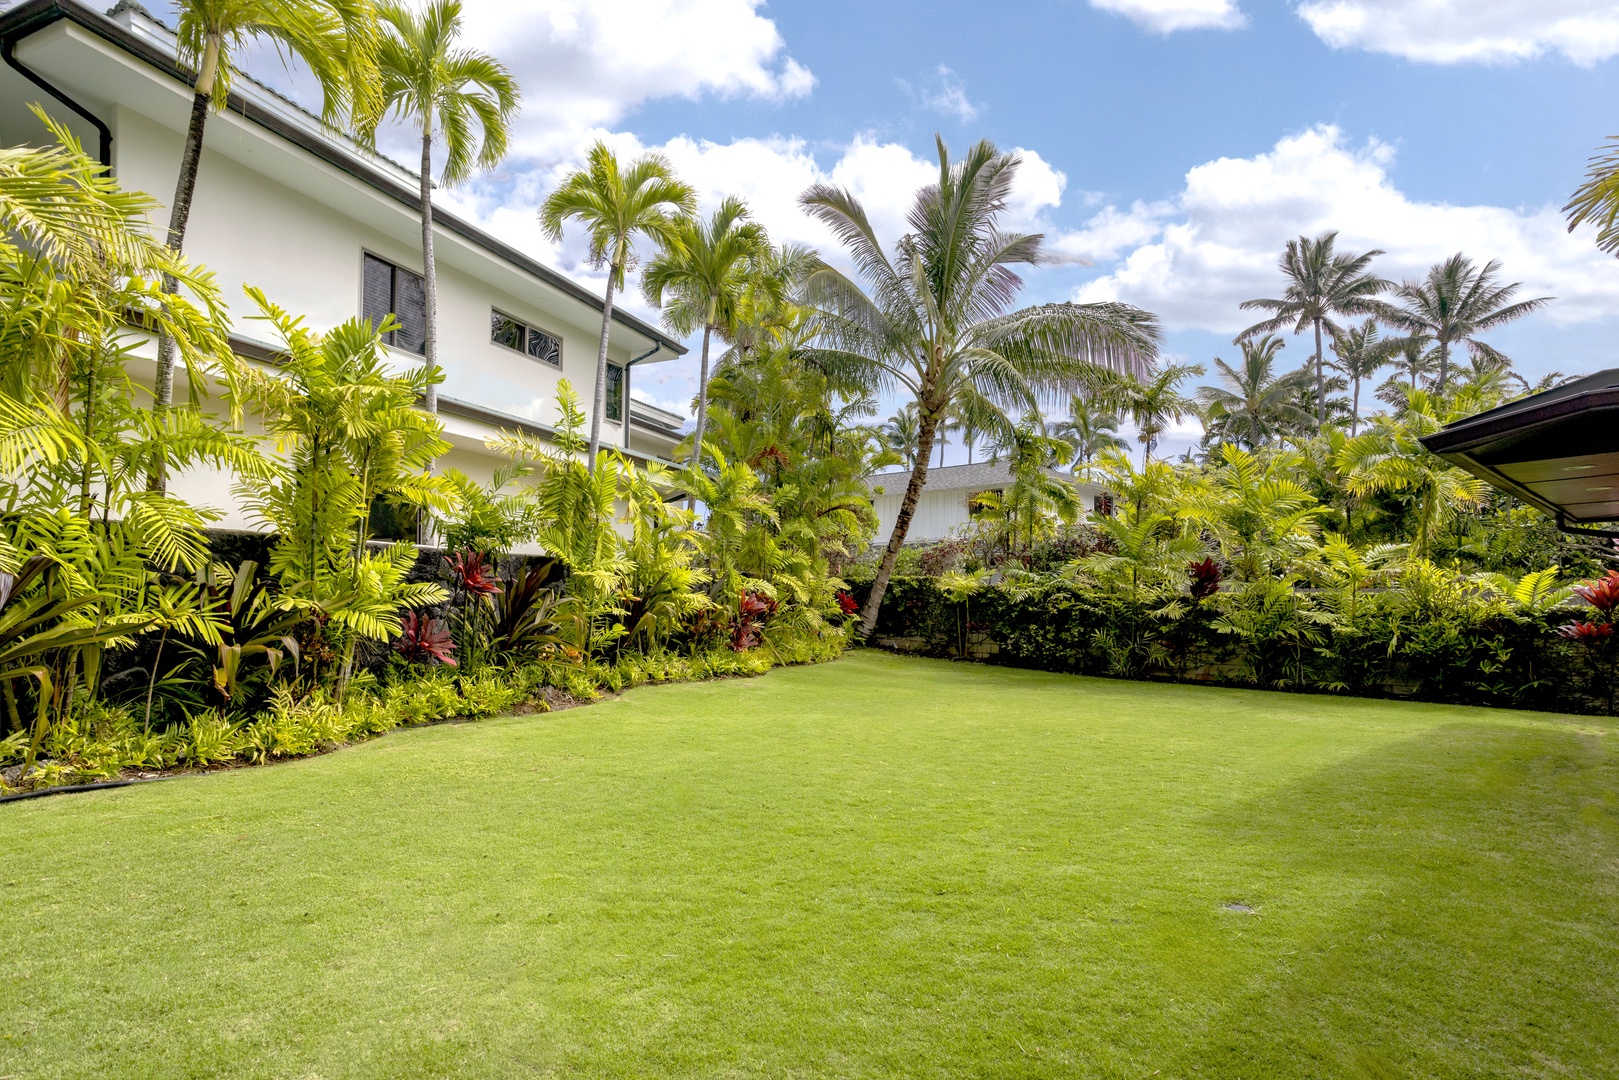 Kailua Vacation Rentals, Mokulua Seaside - Lush green backyard provides privacy and tropical landscaping